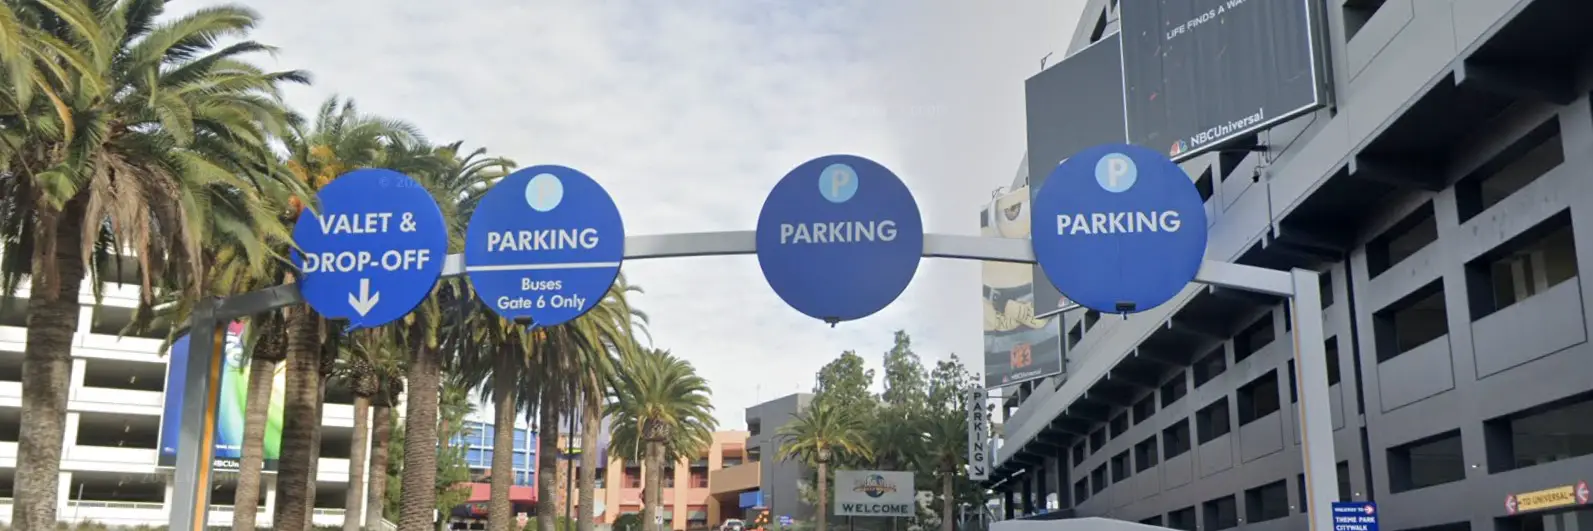 Parking At Universal Studios Hollywood